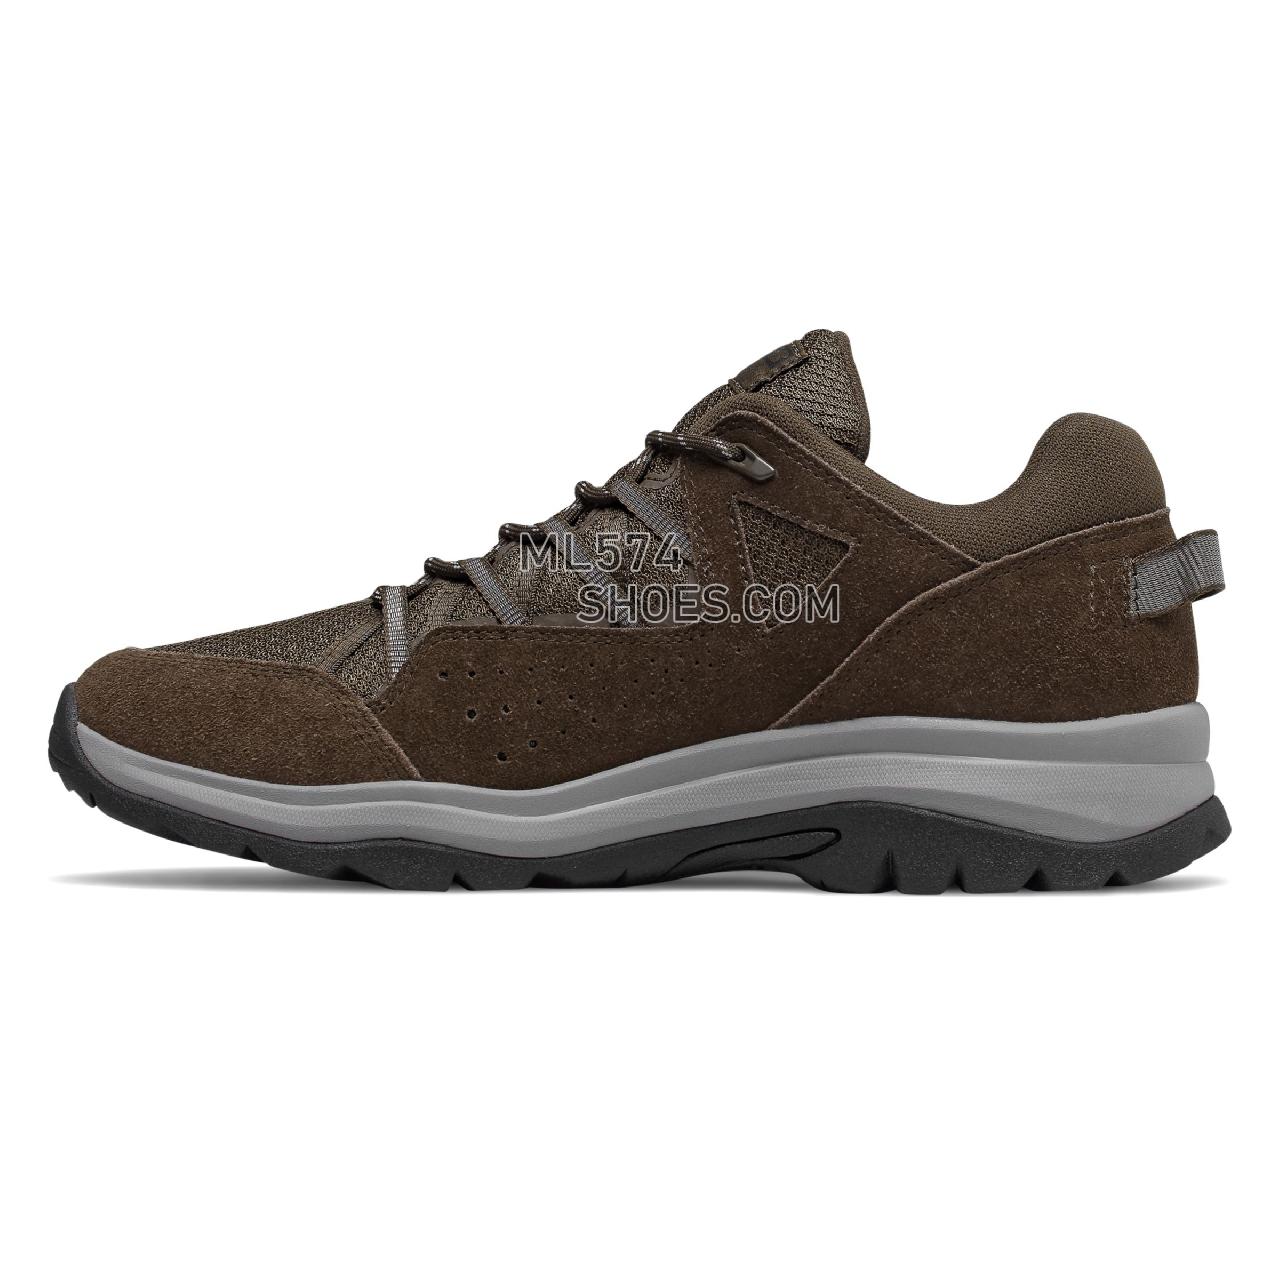 New Balance 669v2 - Men's Walking - Chocolate Brown with Chocolate - MW669LC2